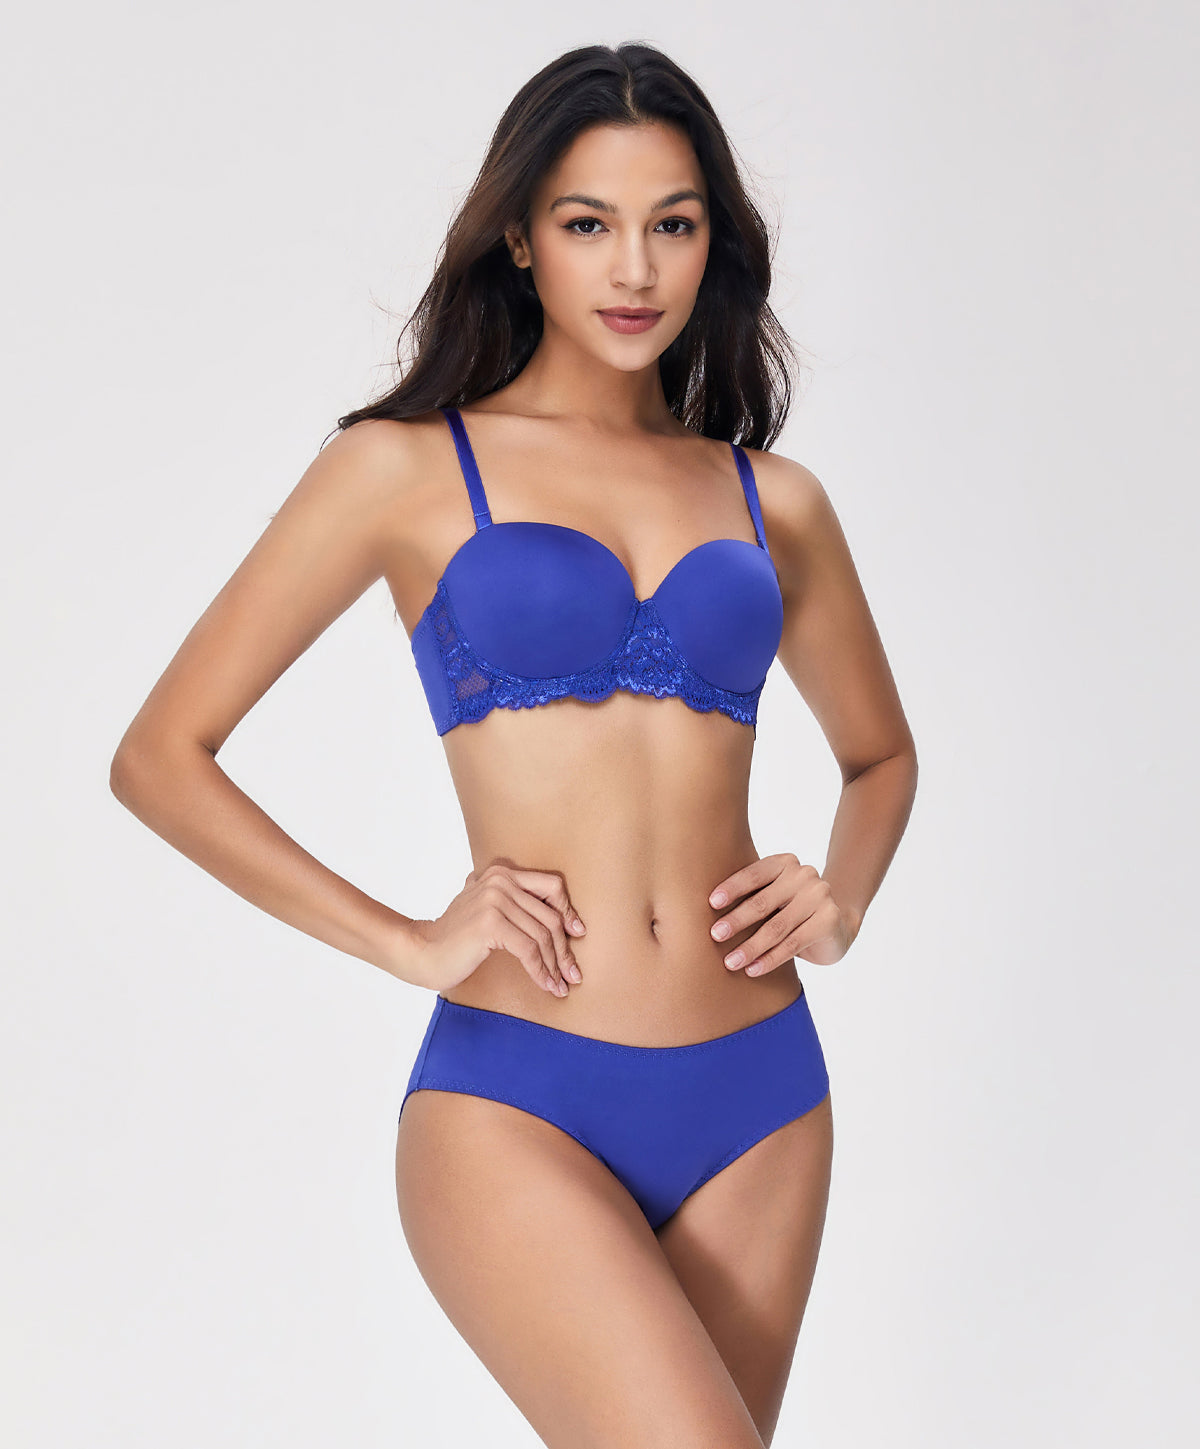 Navy blue bra - End of lingerie series